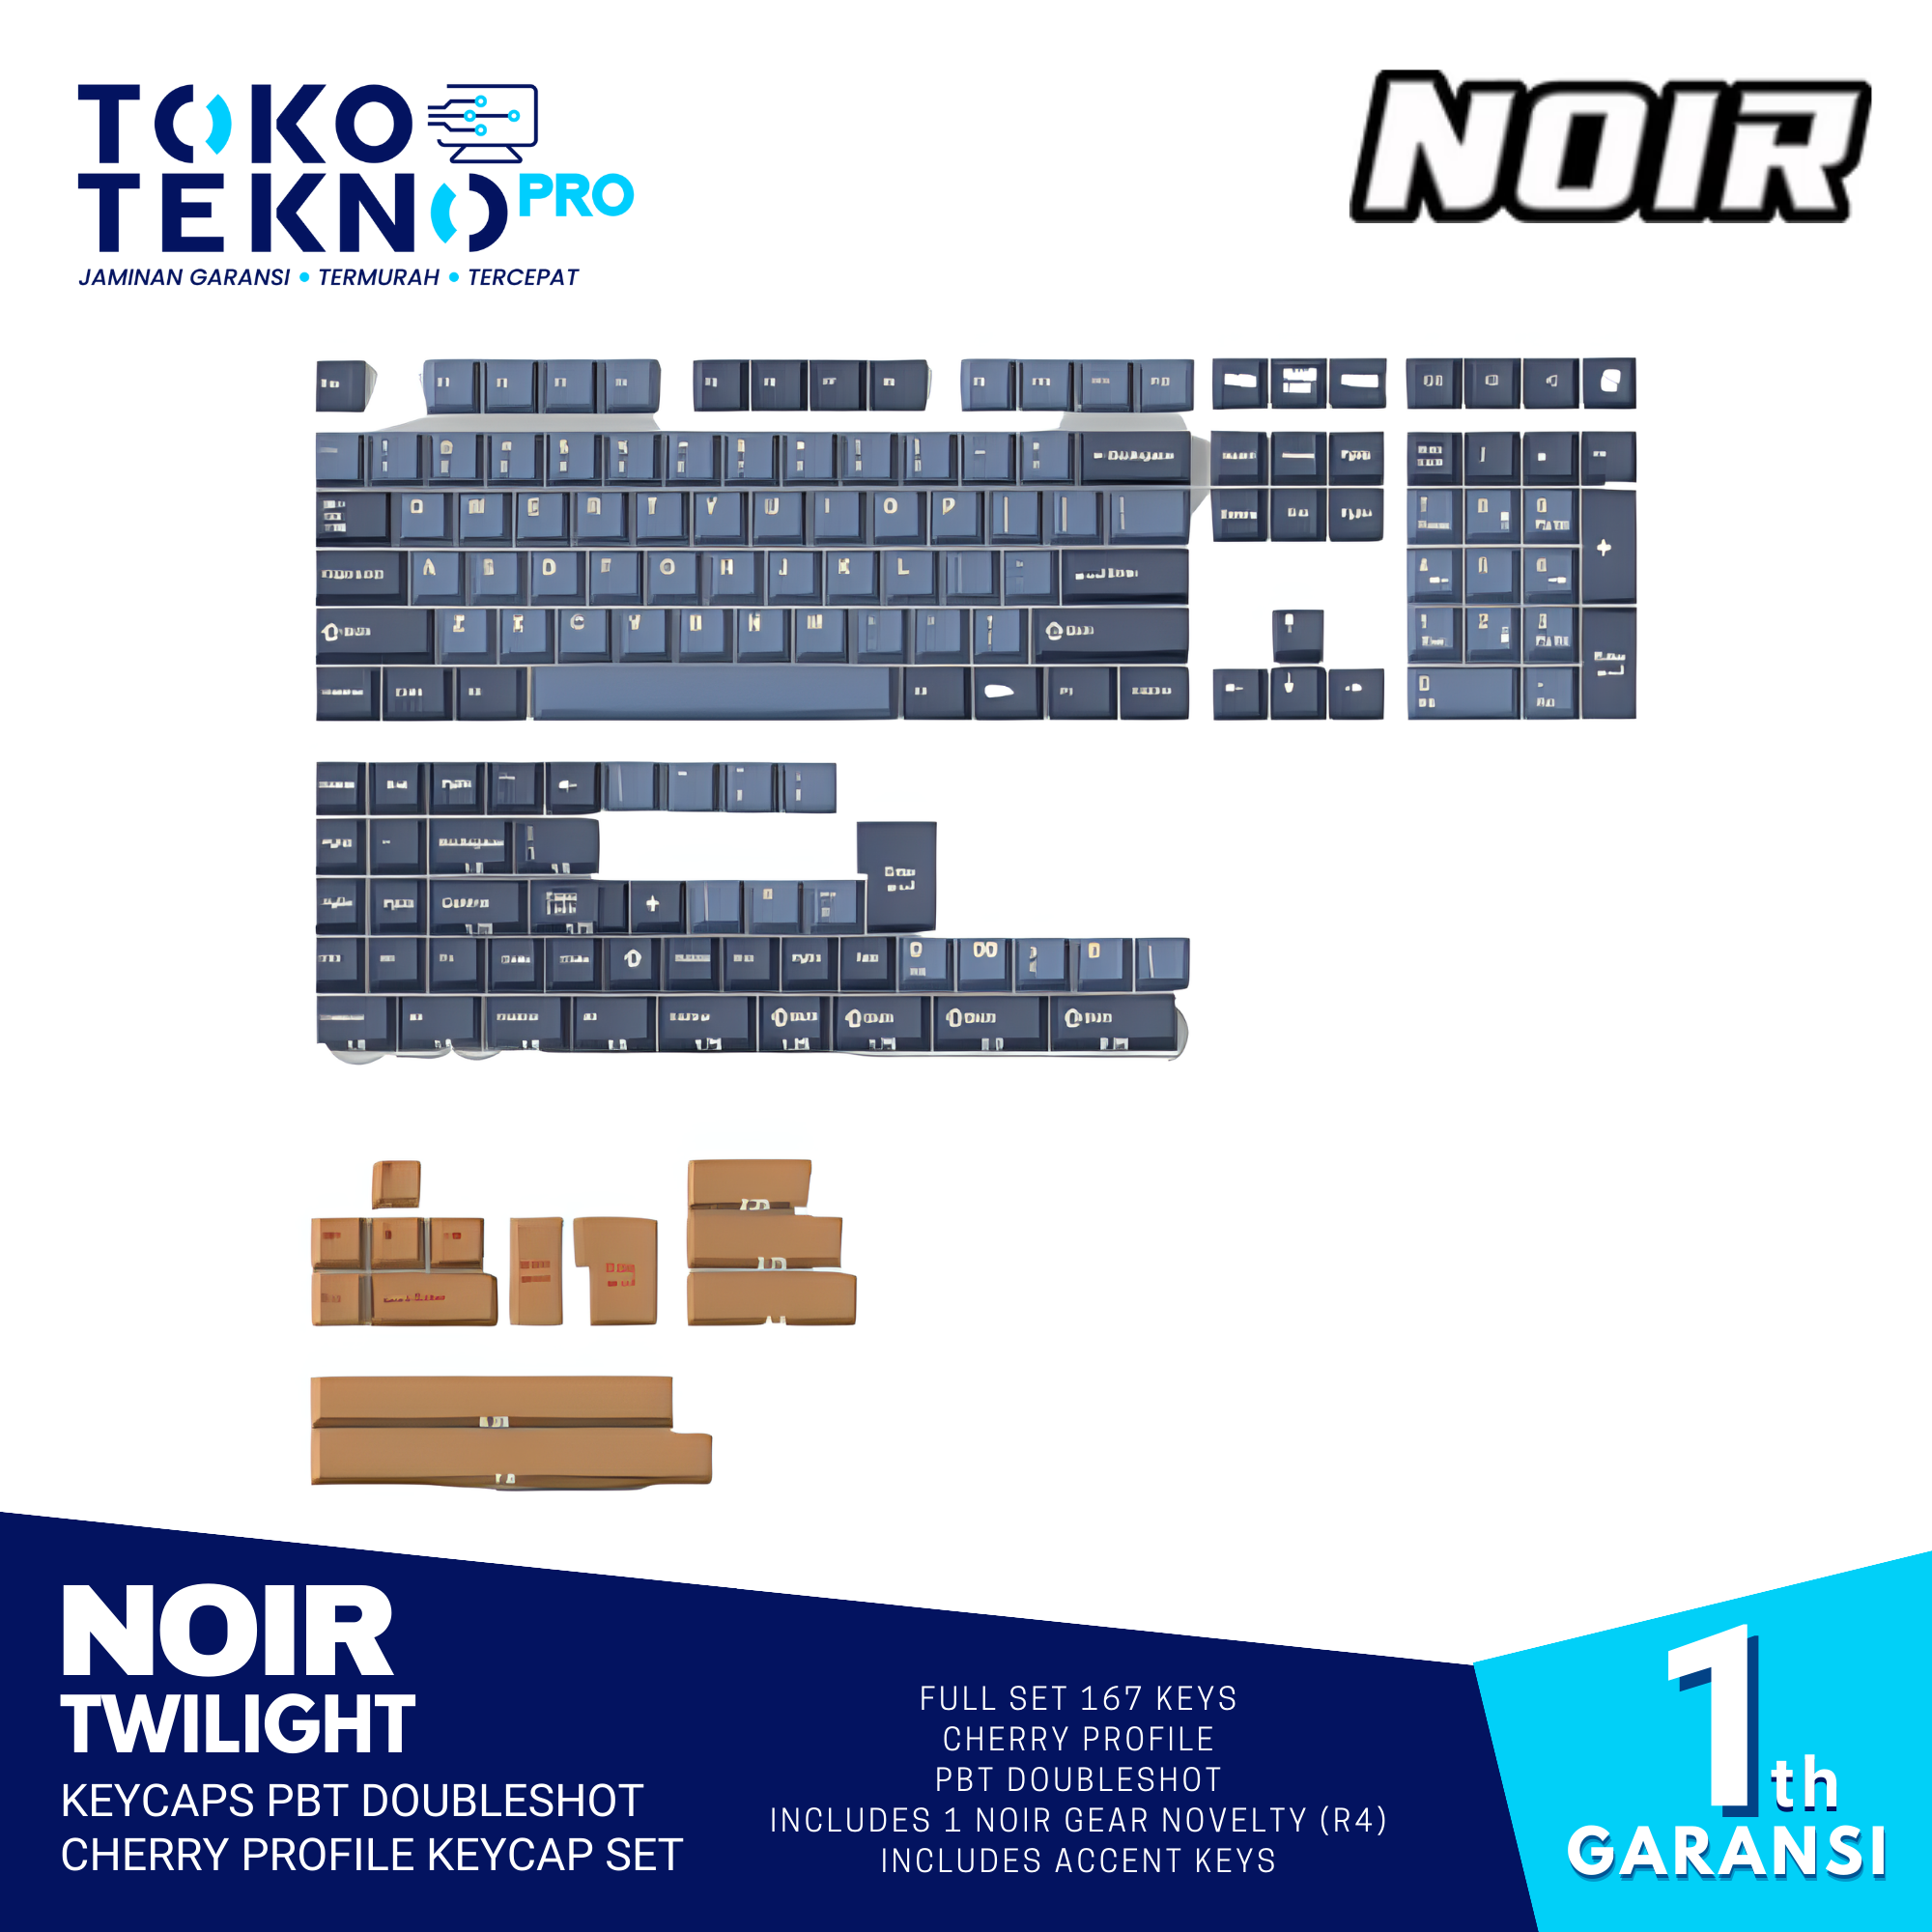 Noir Twilight Keycaps PBT Doubleshot Cherry Profile Keycap Set